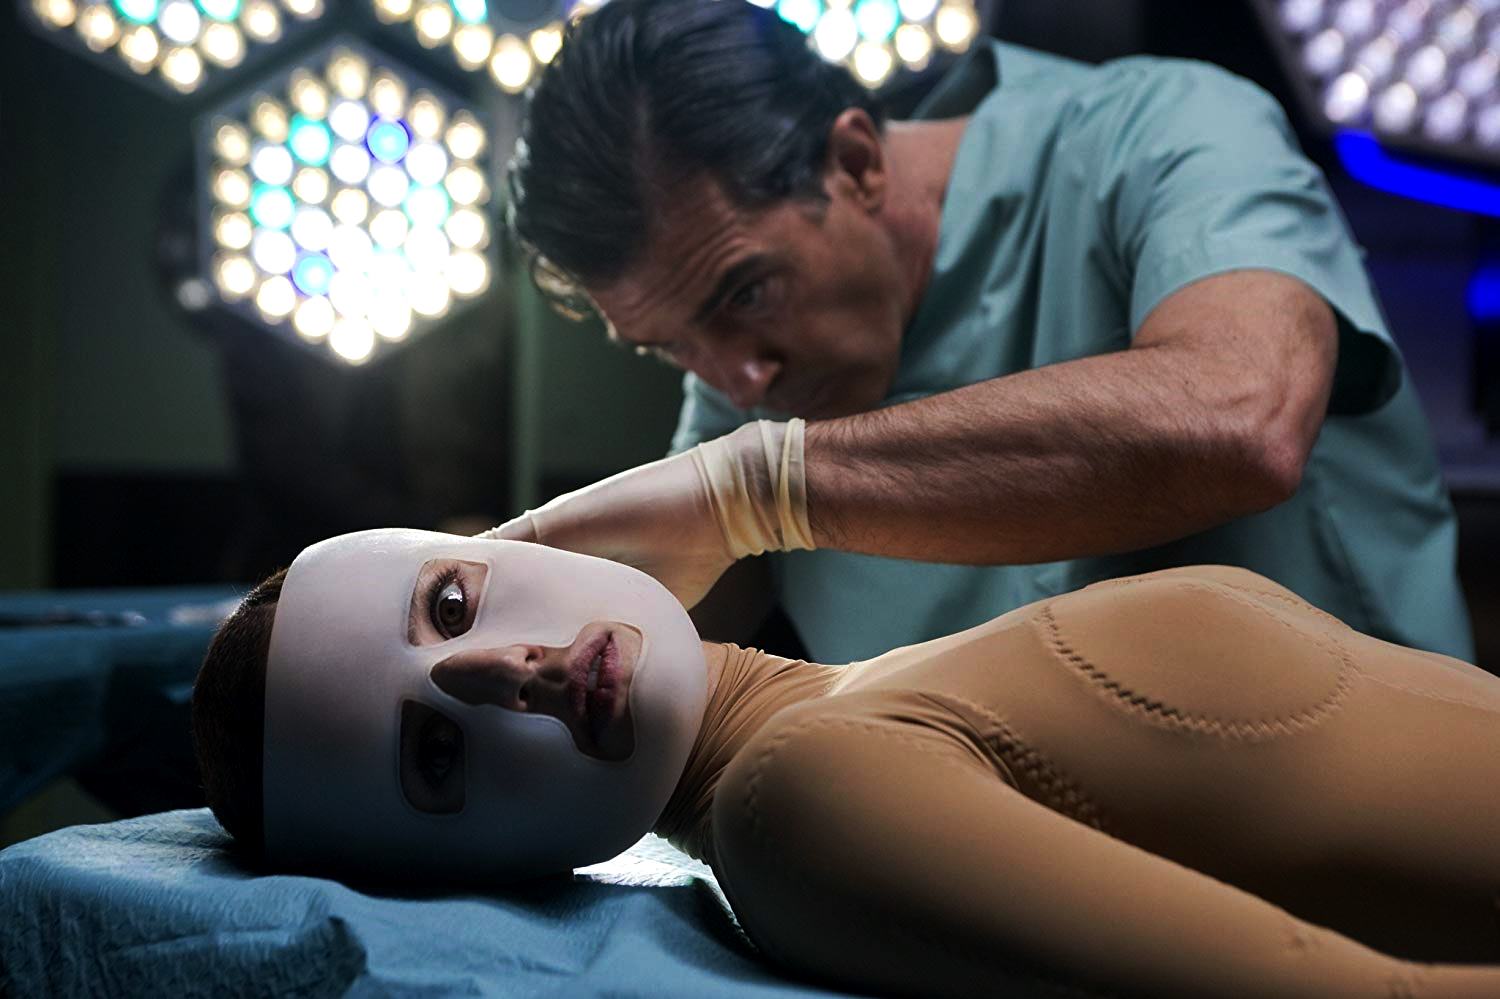 Surgeon Antonio Banderas operates on Elena Anaya in The Skin I Live In (2011)